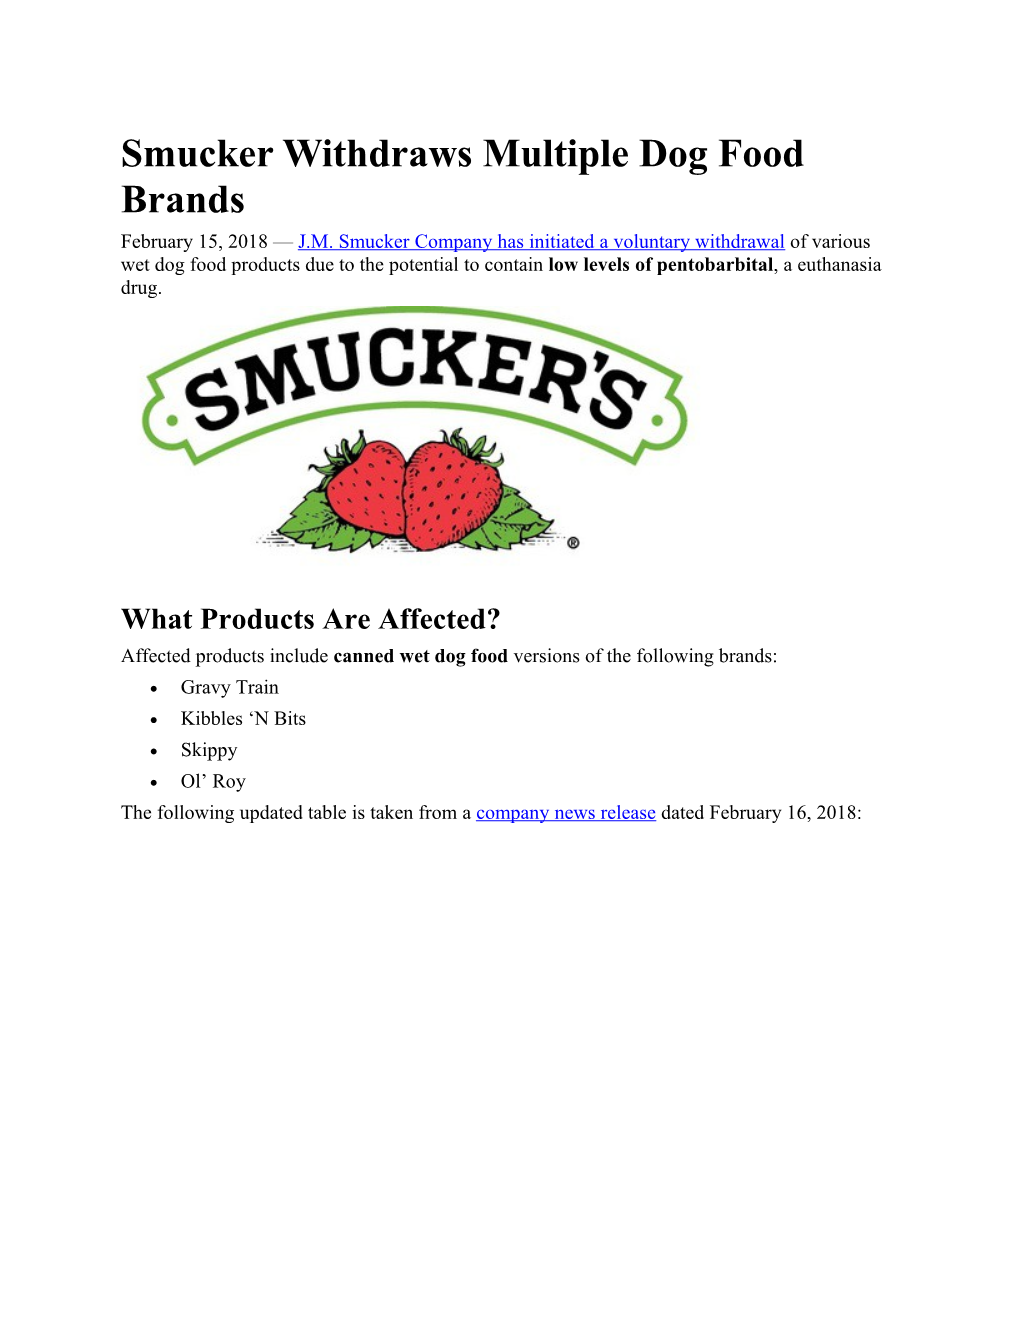 Smucker Withdraws Multiple Dog Food Brands